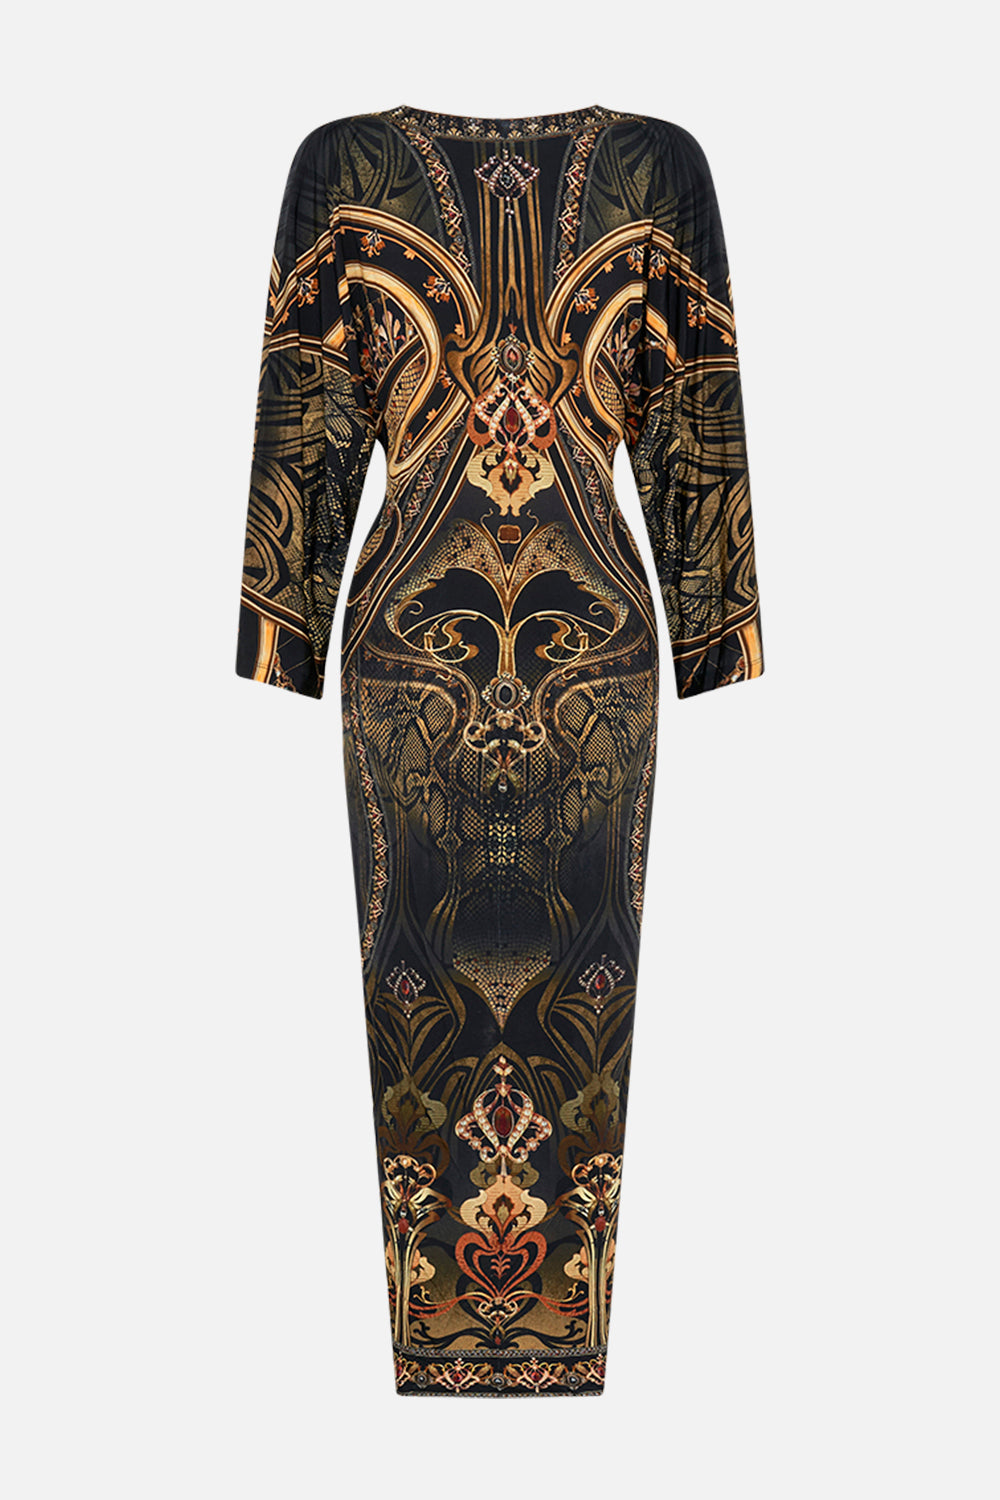 CAMILLA maxi dress in Nouveau Noir print